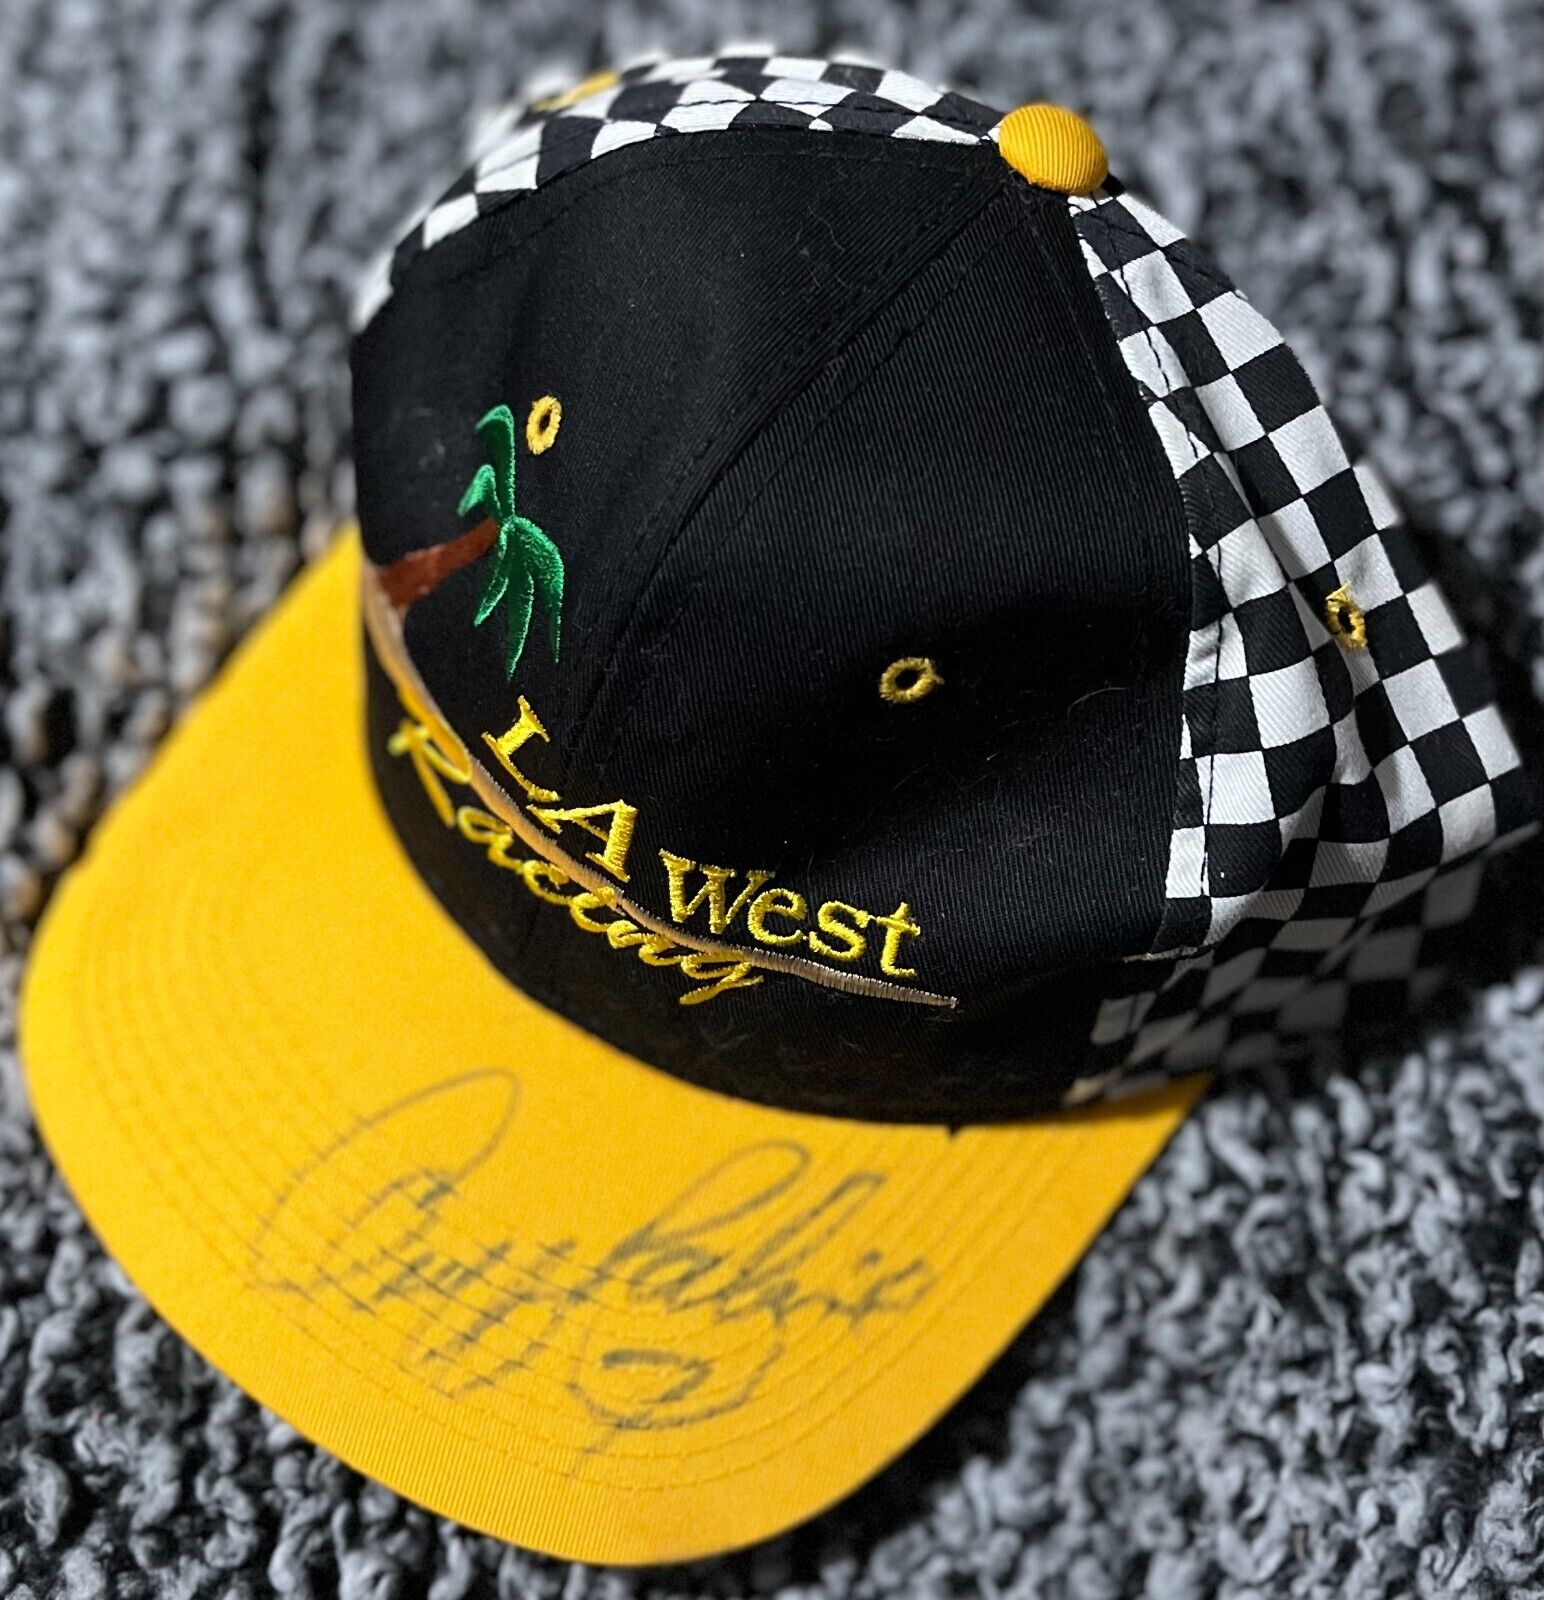 Geoff Bodine Signed Vintage La West Racing Snapback Hat